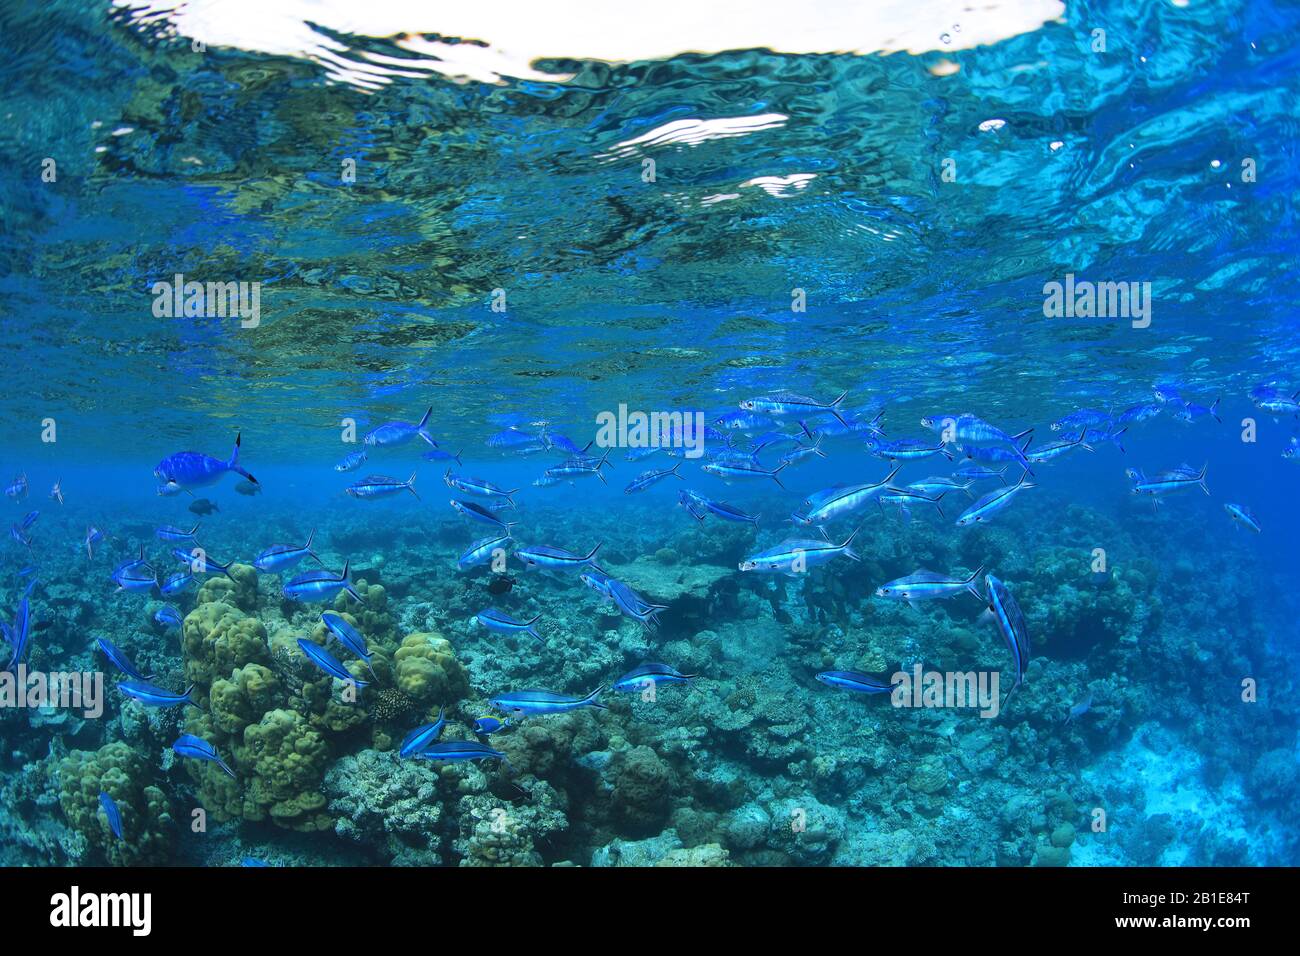 Shoal of Bluestreak fusilier fish (Pterocaesio tile) underwater in the tropical waters of the indian ocean Stock Photo